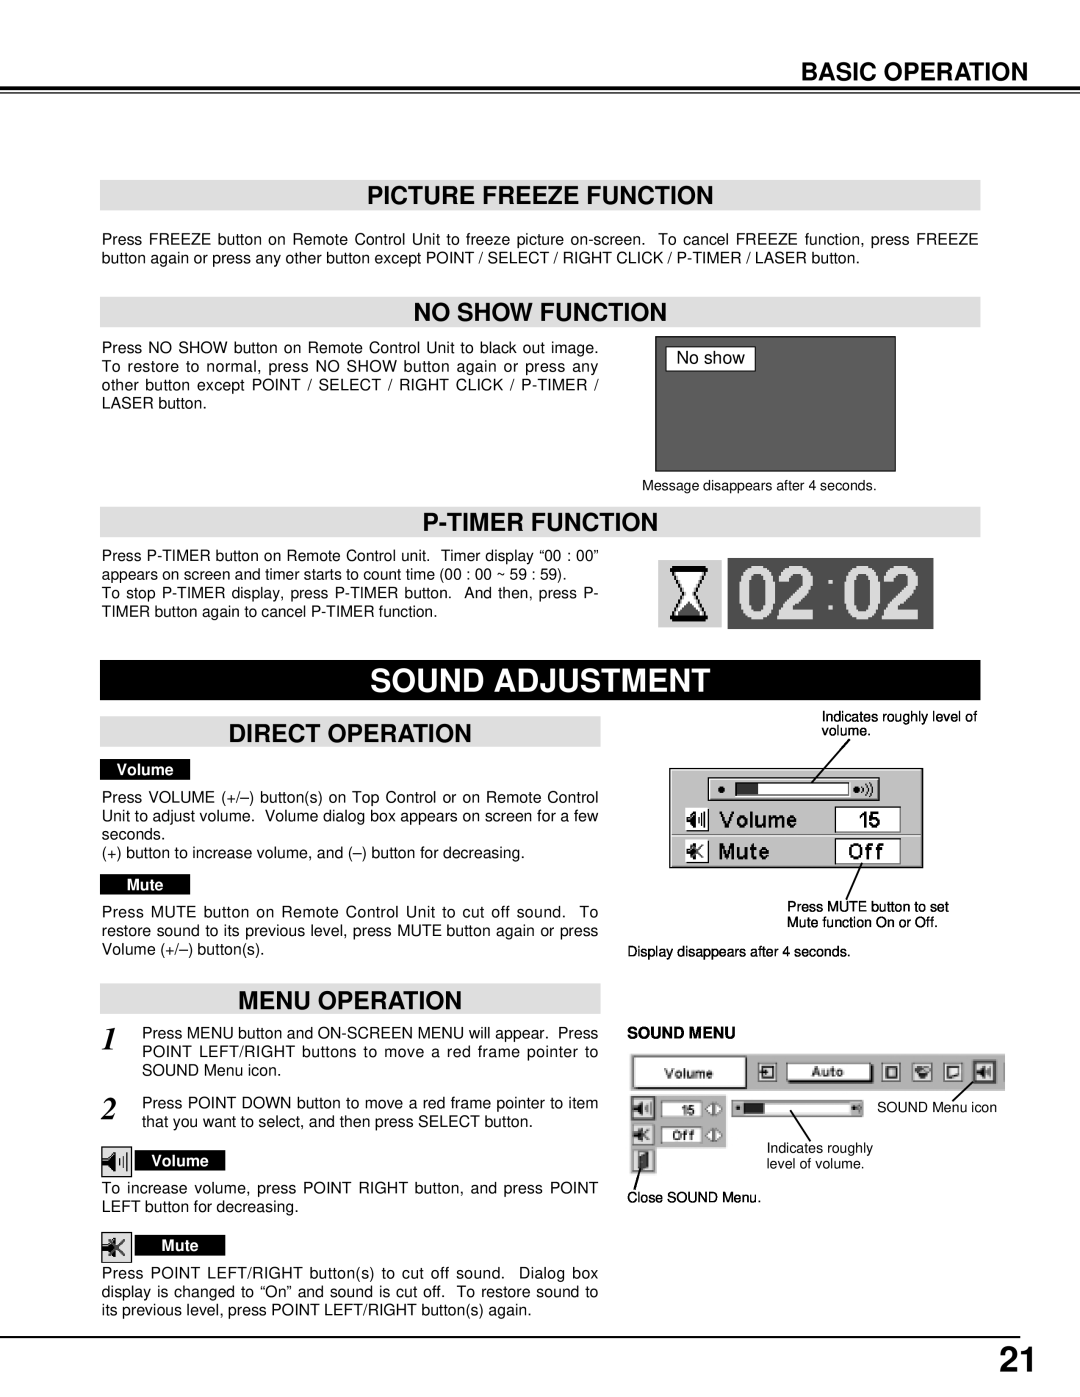 BOXLIGHT MP-41T Sound Adjustment, Basic Operation Picture Freeze Function, No Show Function, P-Timer Function, Sound Menu 